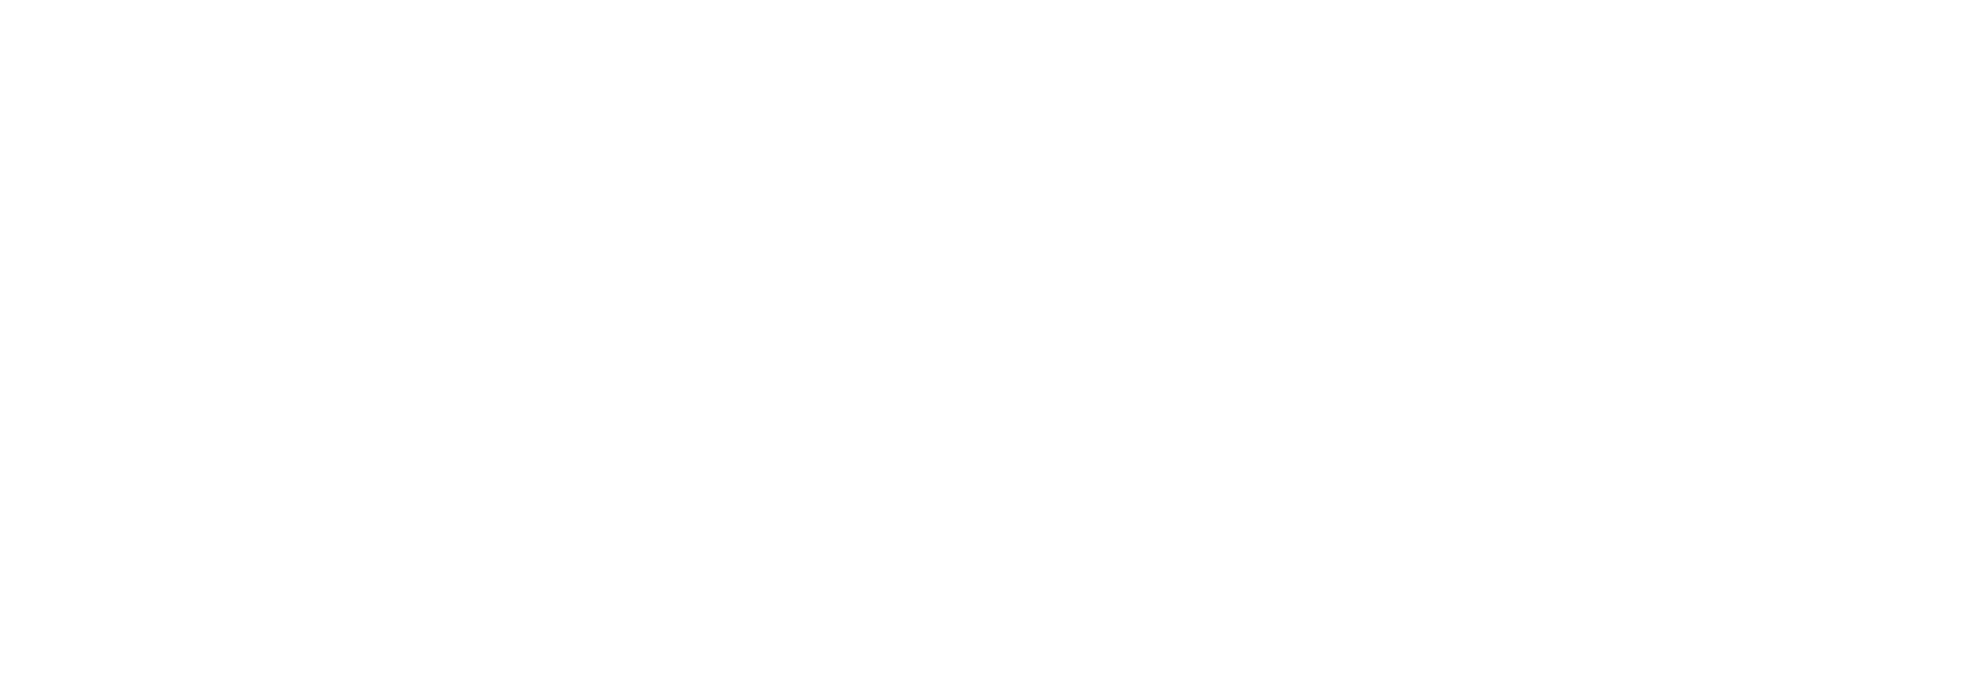 Katsumi identité visuelle - Logo, packagin design, editorial